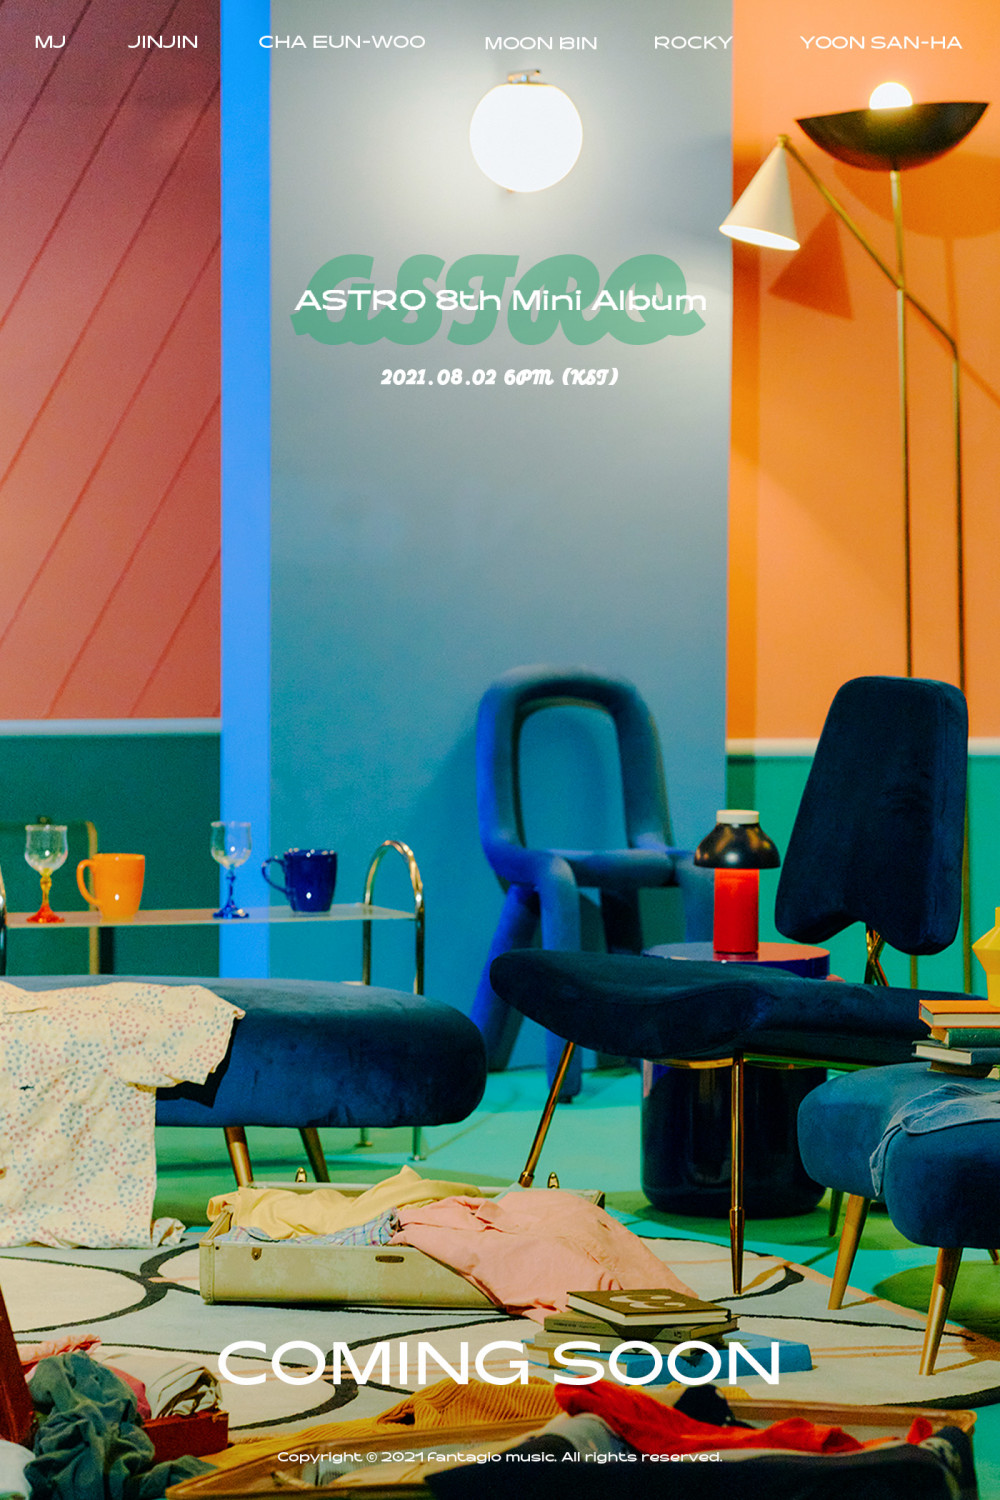 [Камбэк] ASTRO мини-альбом "SWITCH ON": MV "After Midnight"